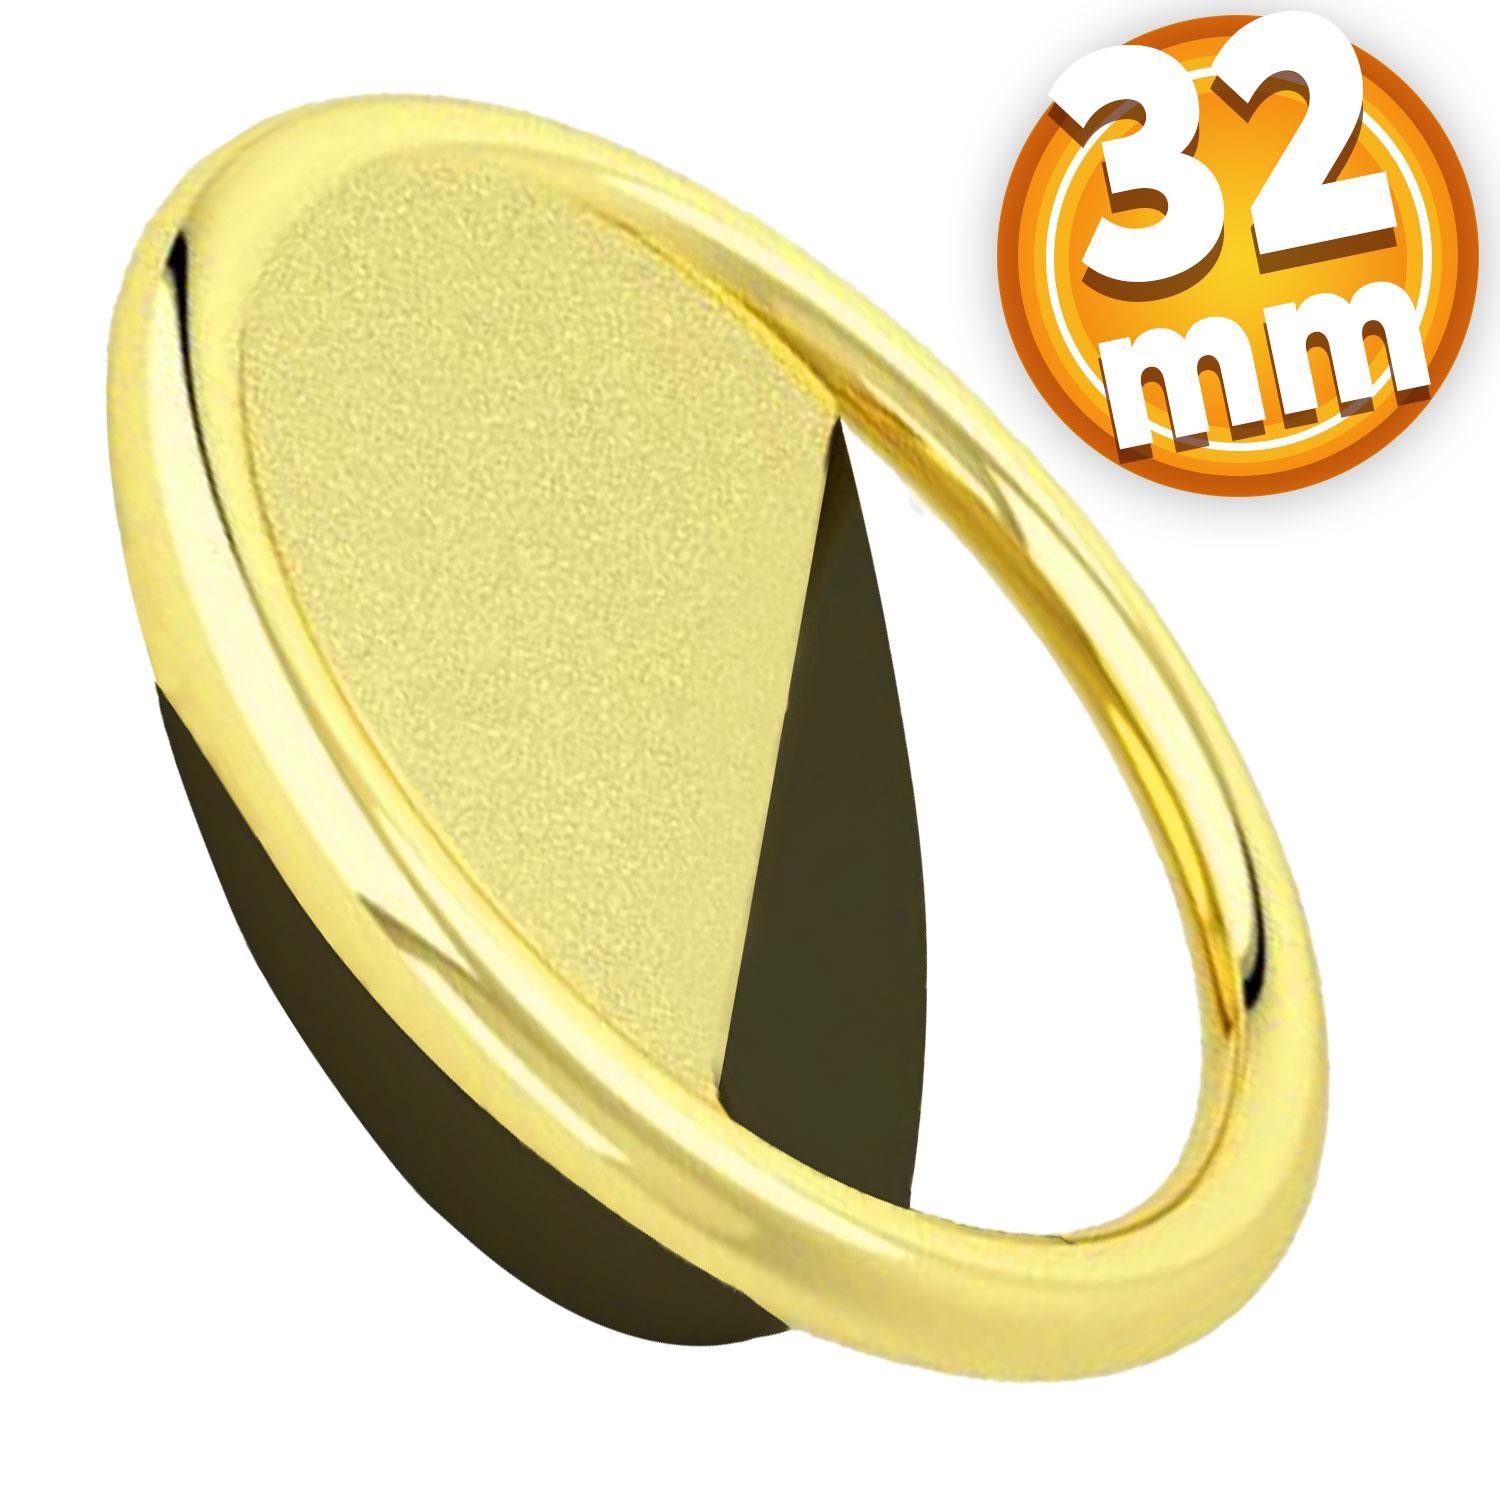 Rio Mobilya Çekmece Dolap Kapak Kulpu Kulbu 32 mm Plastik Matsiyah Altın Gold Kulp